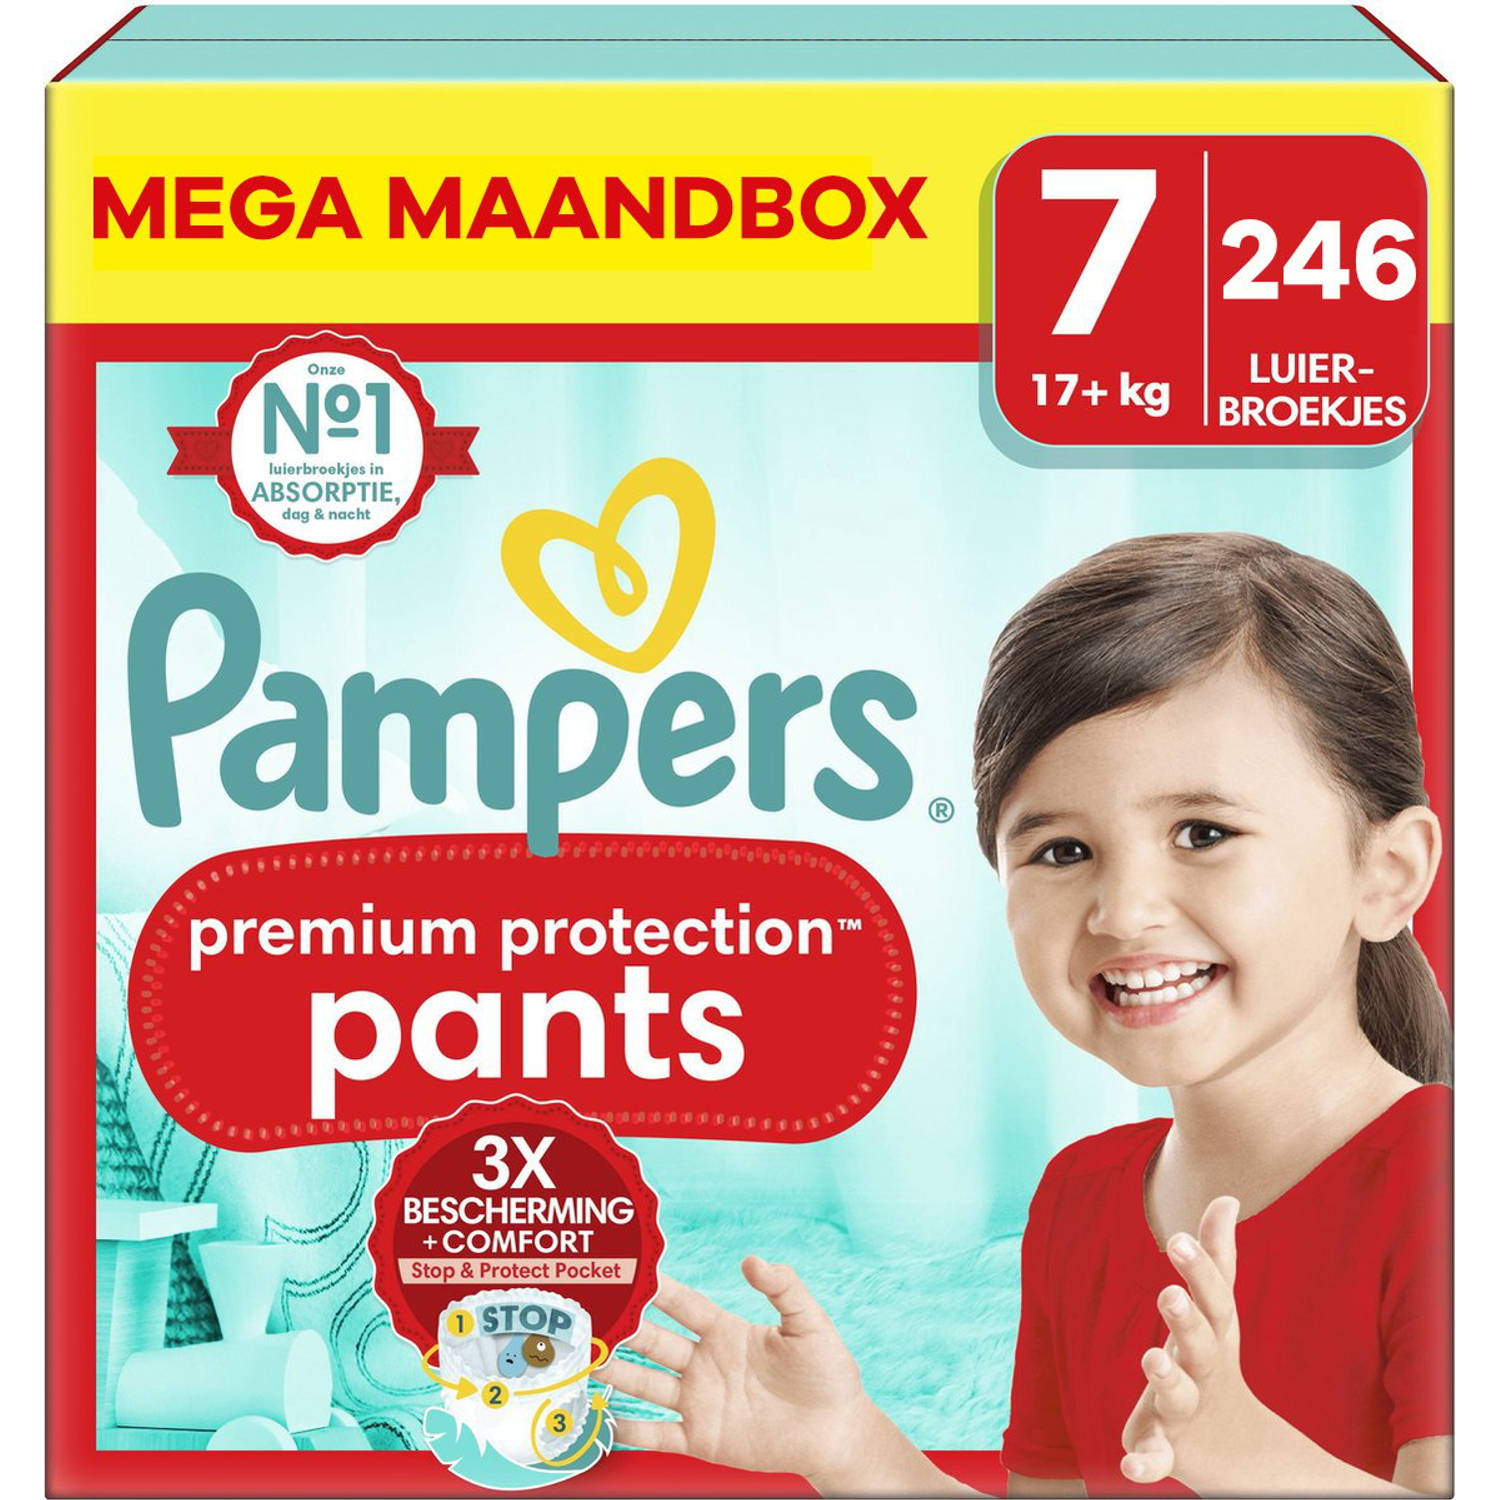 Pampers Premium Protection Pants Maat 7 Mega Maandbox 246 stuks 17+ KG